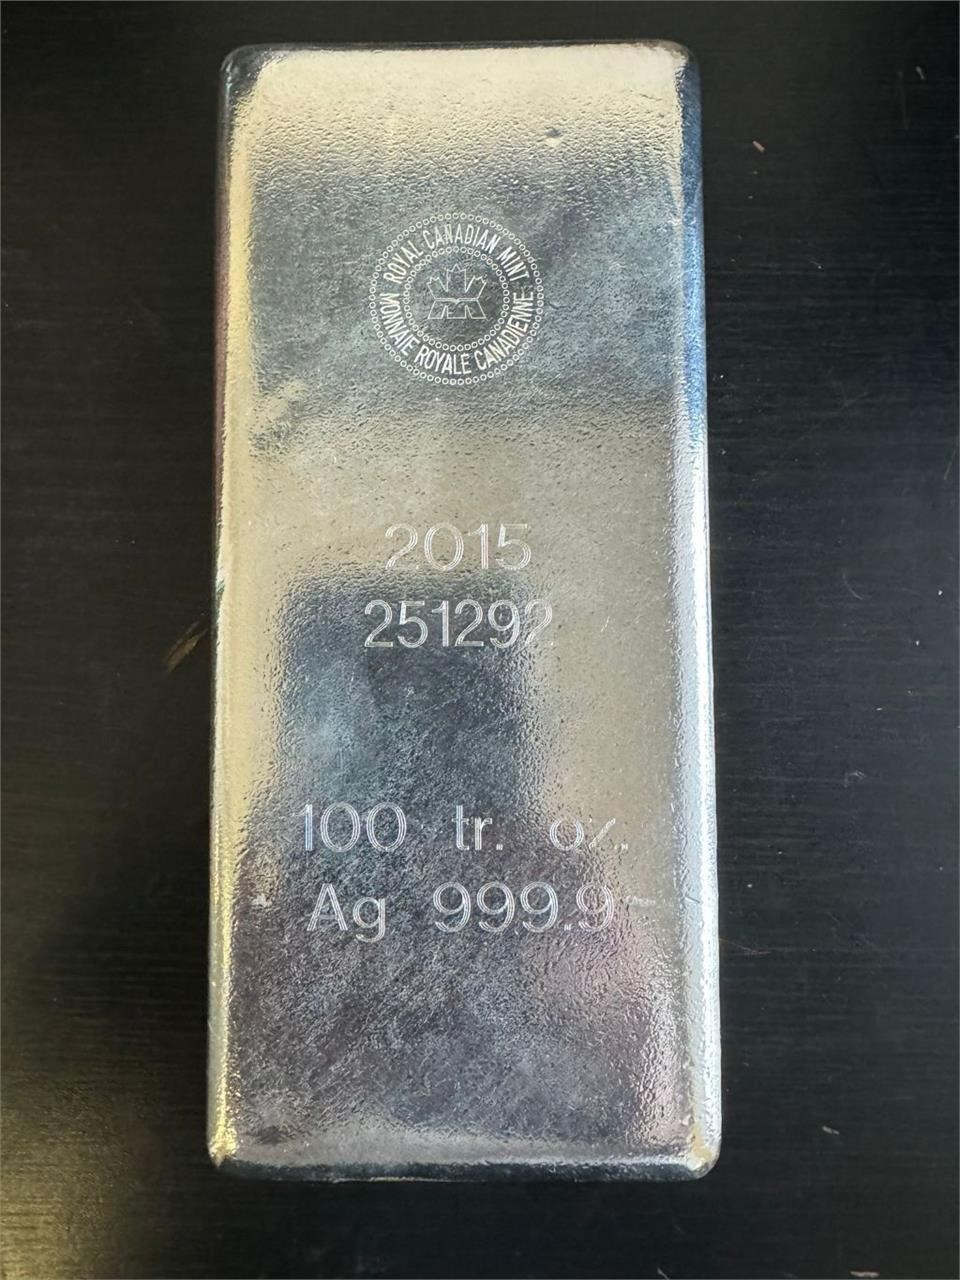 100 toz silver bar 2